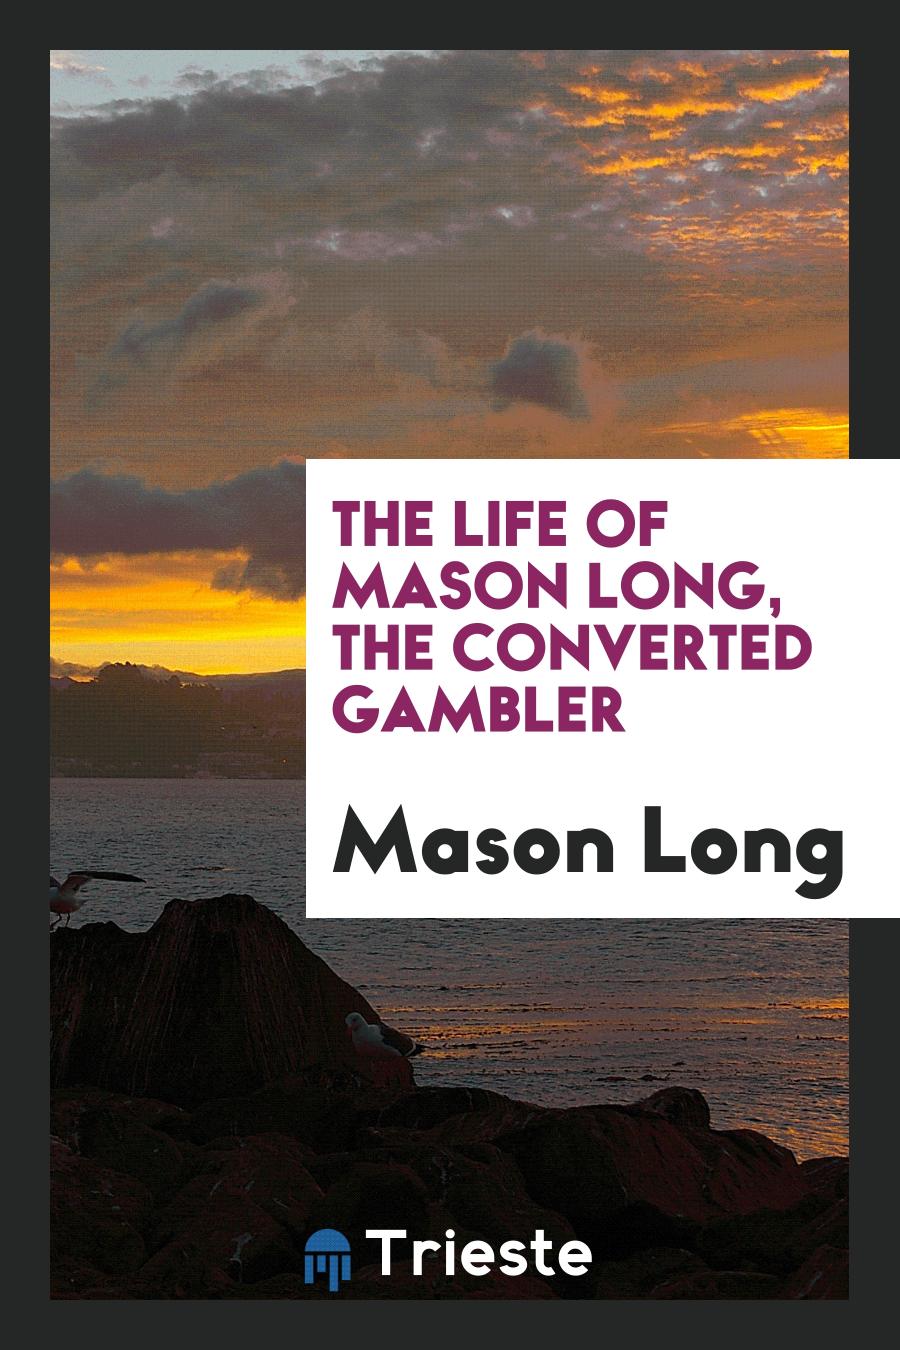 The life of Mason Long, the converted gambler